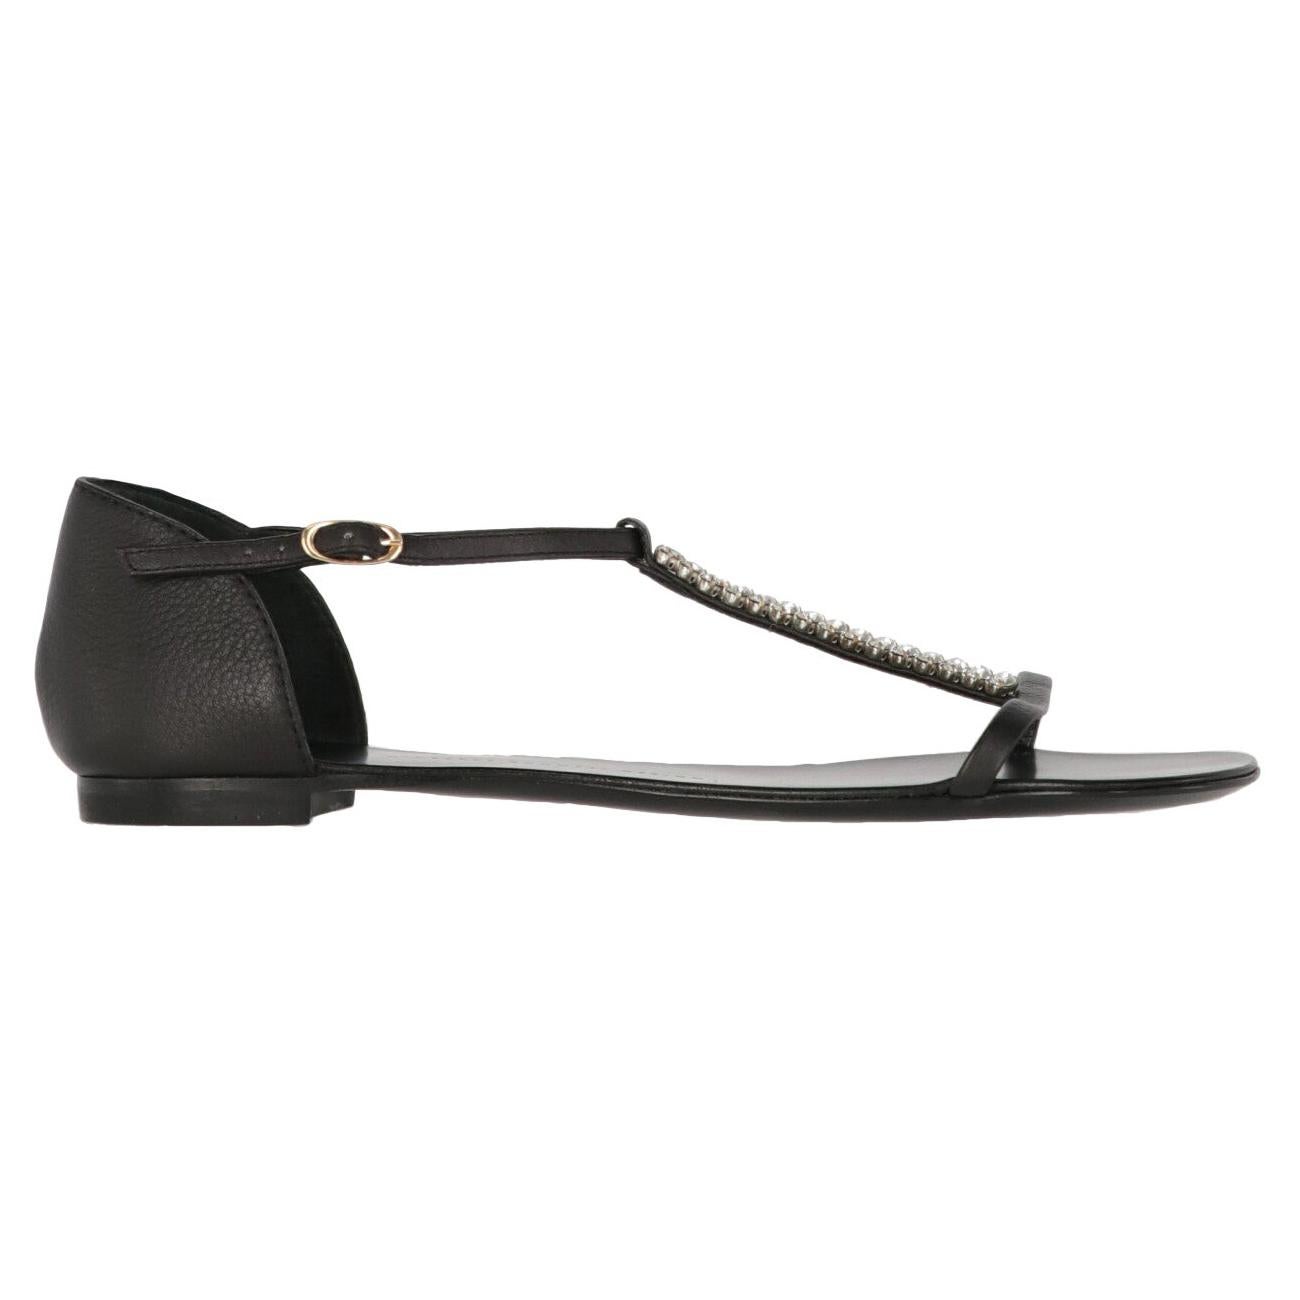 2010s Giuseppe Zanotti Embellished Flat Sandals